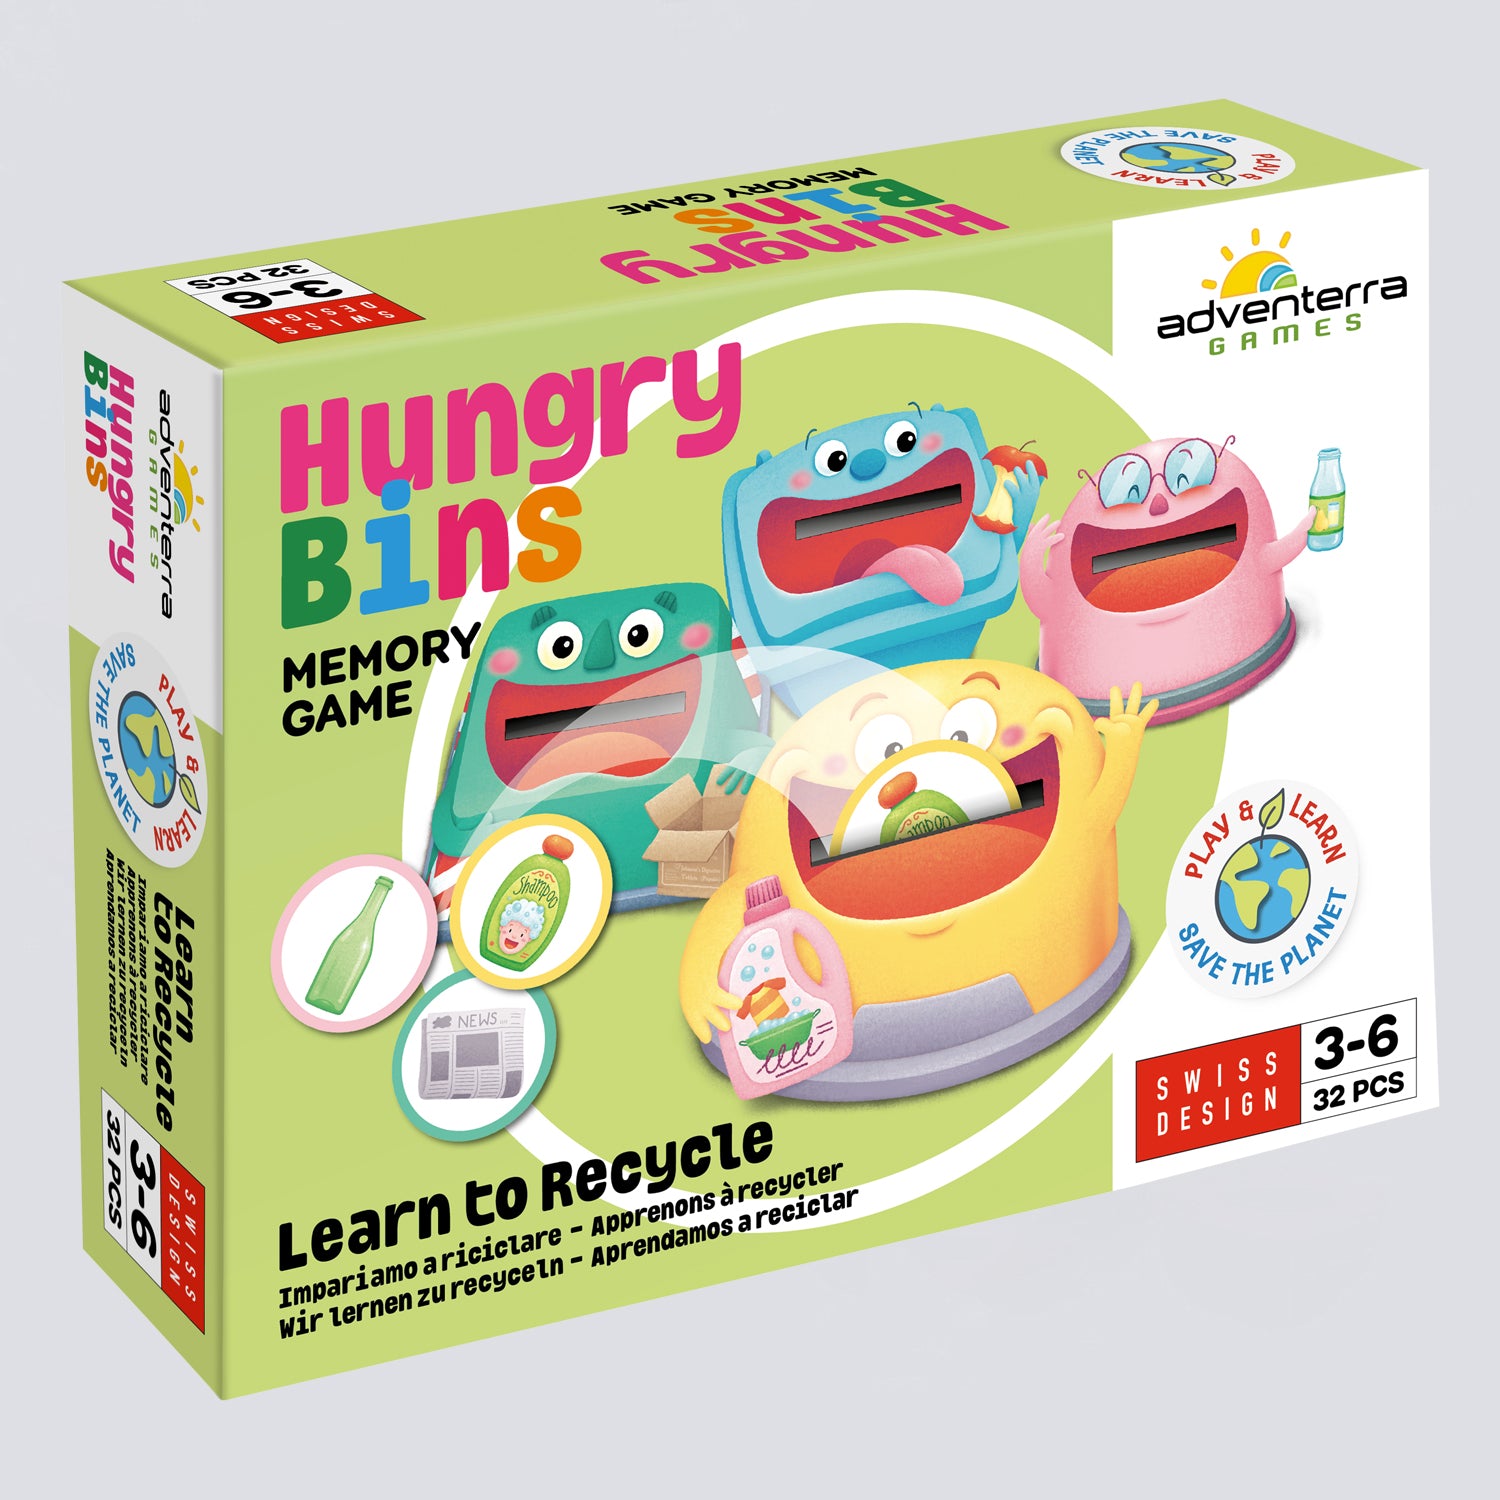 Adventerra Games Hungry Bins - Wir lernen recyceln